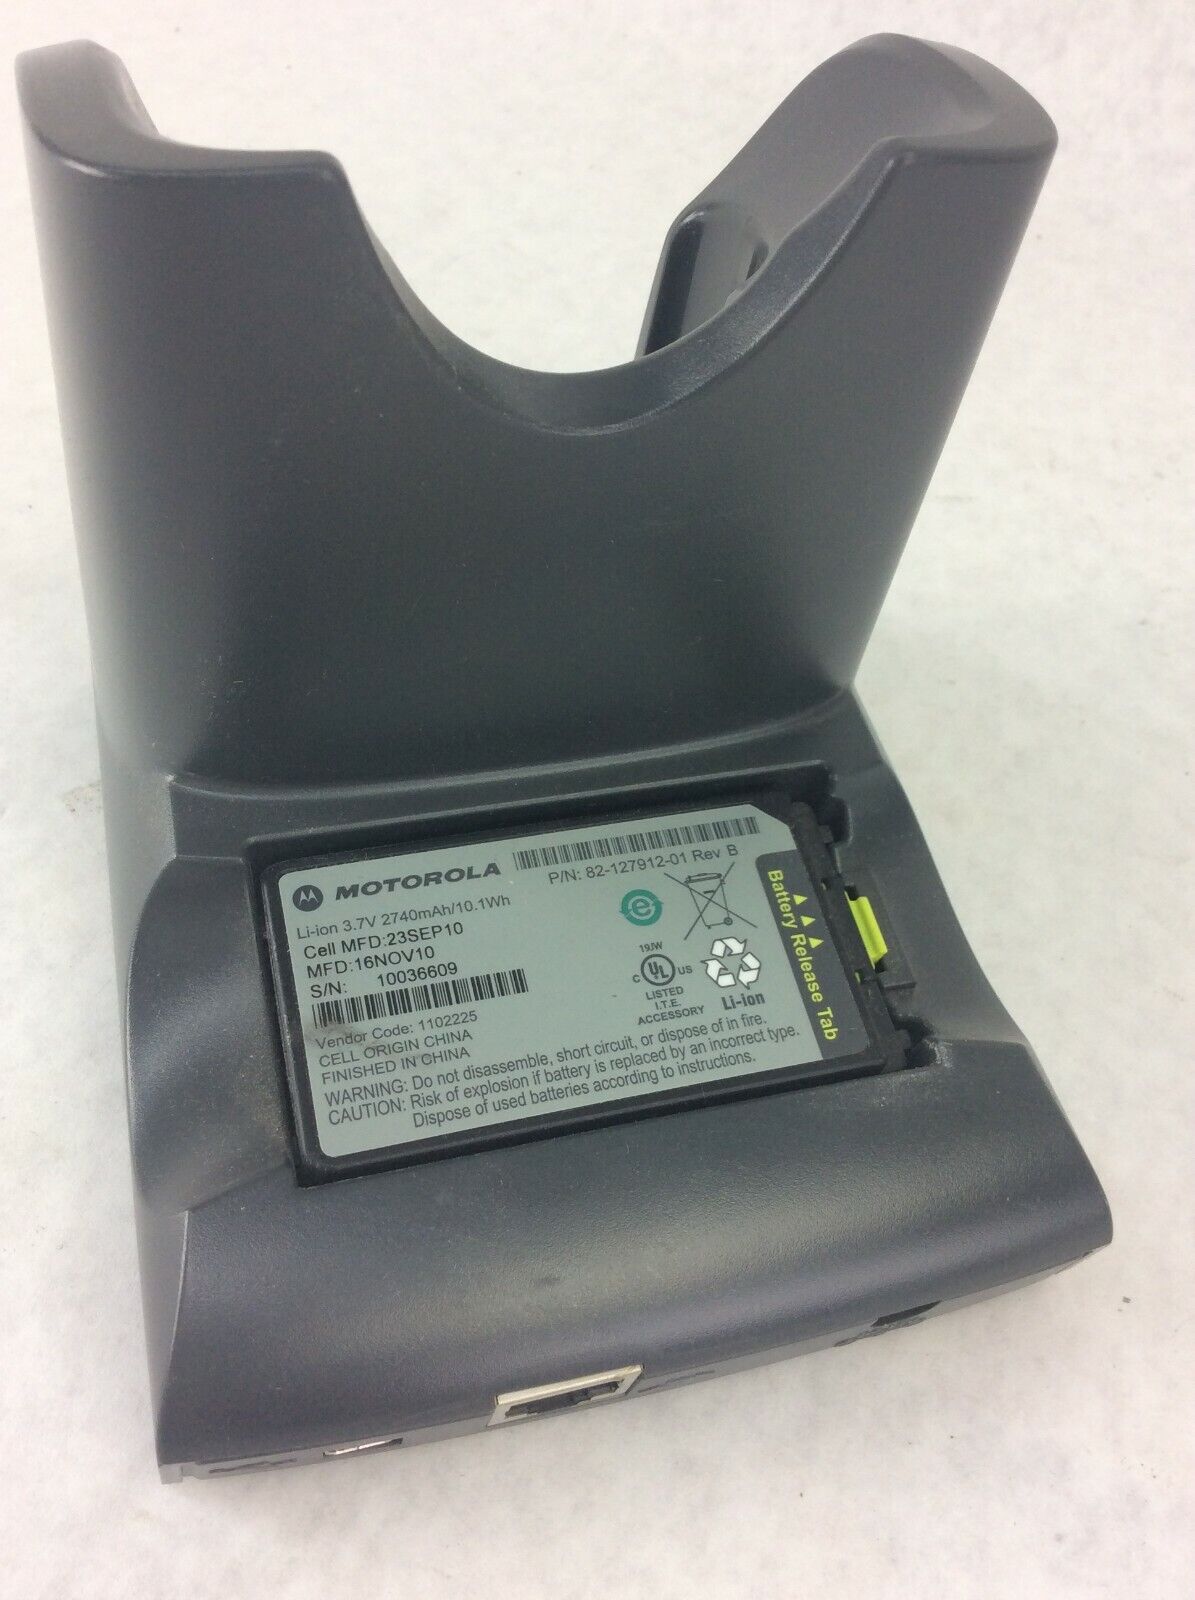 Symbol Motorola CRD3000-1000R Cradle for MC3090 w/ 82-127912 Battery